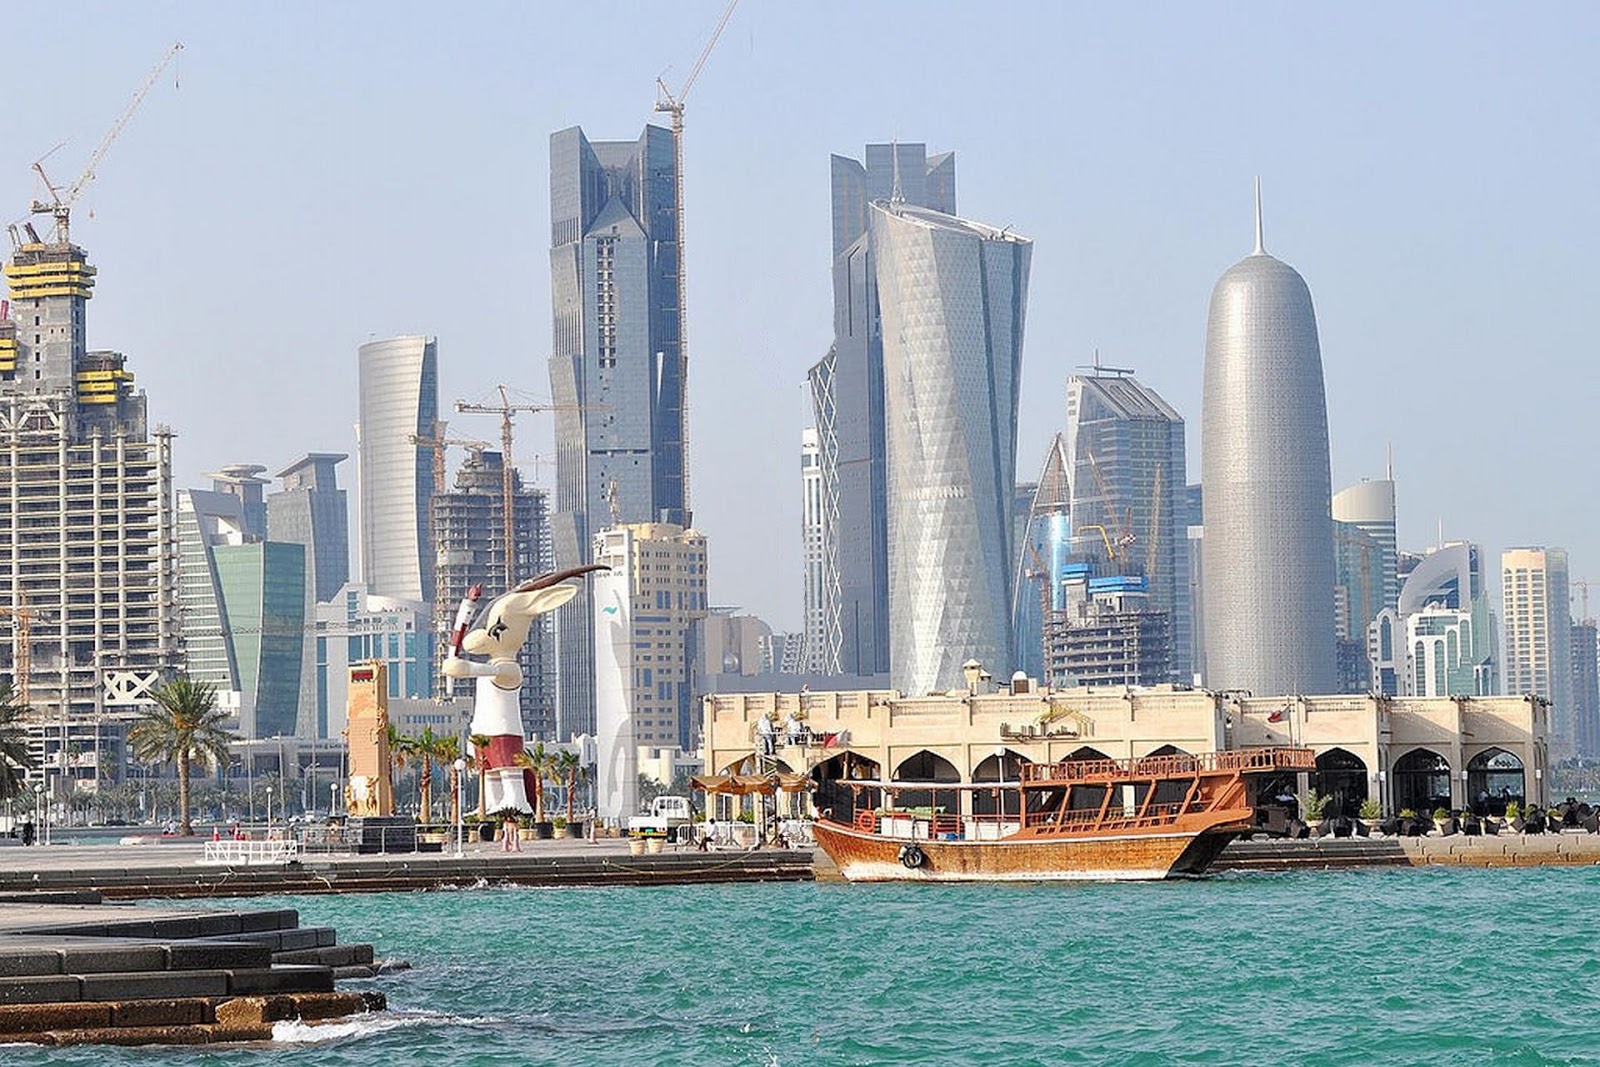 Qatar 2030